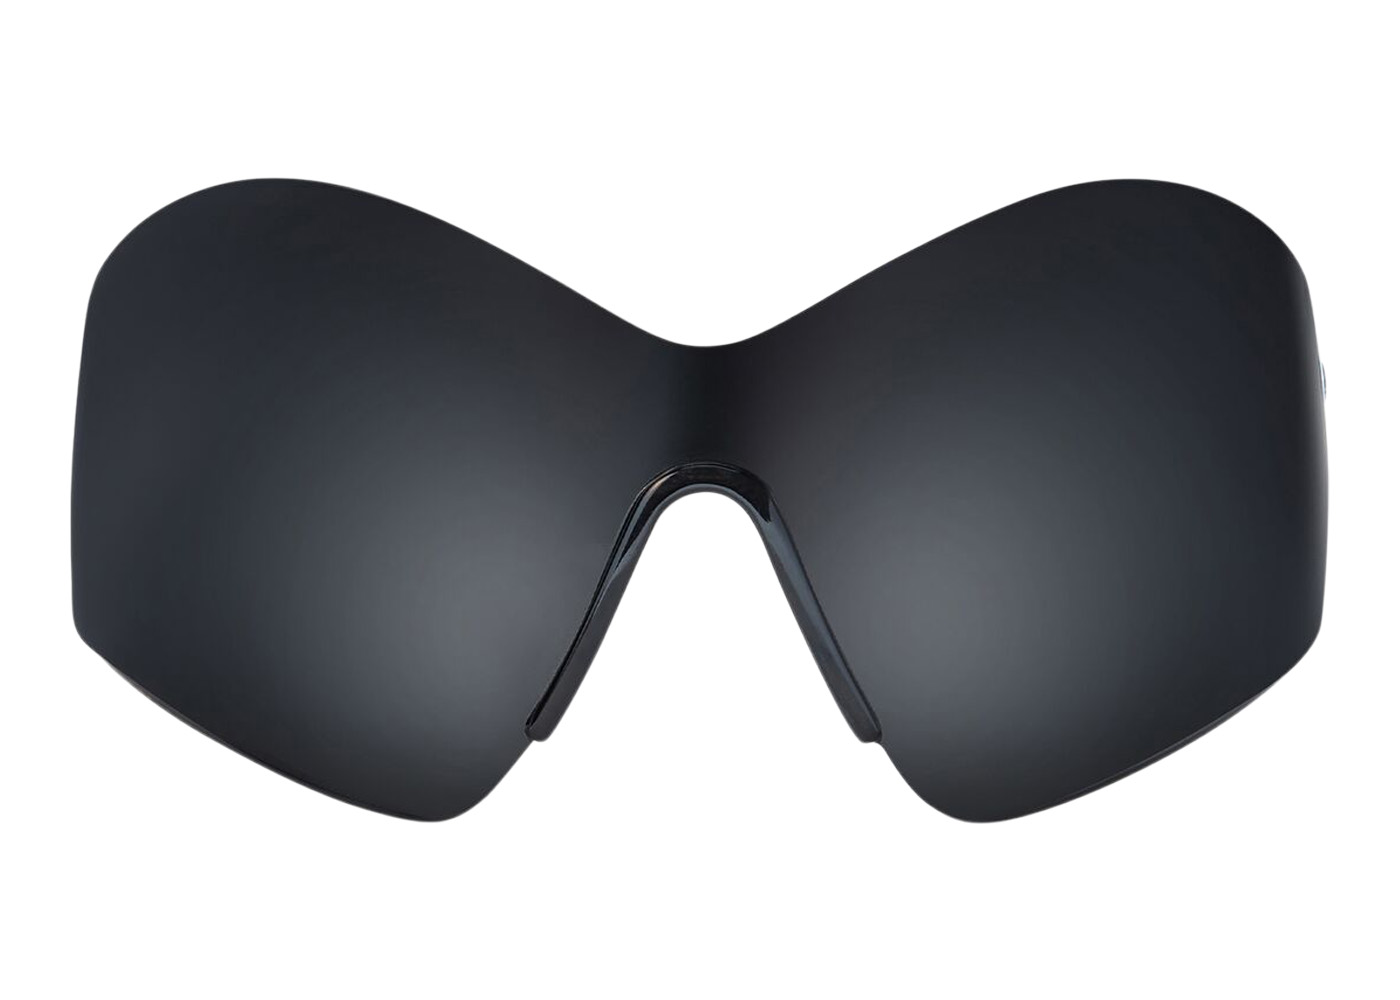 Balenciaga  Sunglasses with Led Lights  BB0100S 001  Limited Edition   Black  Sunglasses  Balenciaga Eyewear  Avvenice